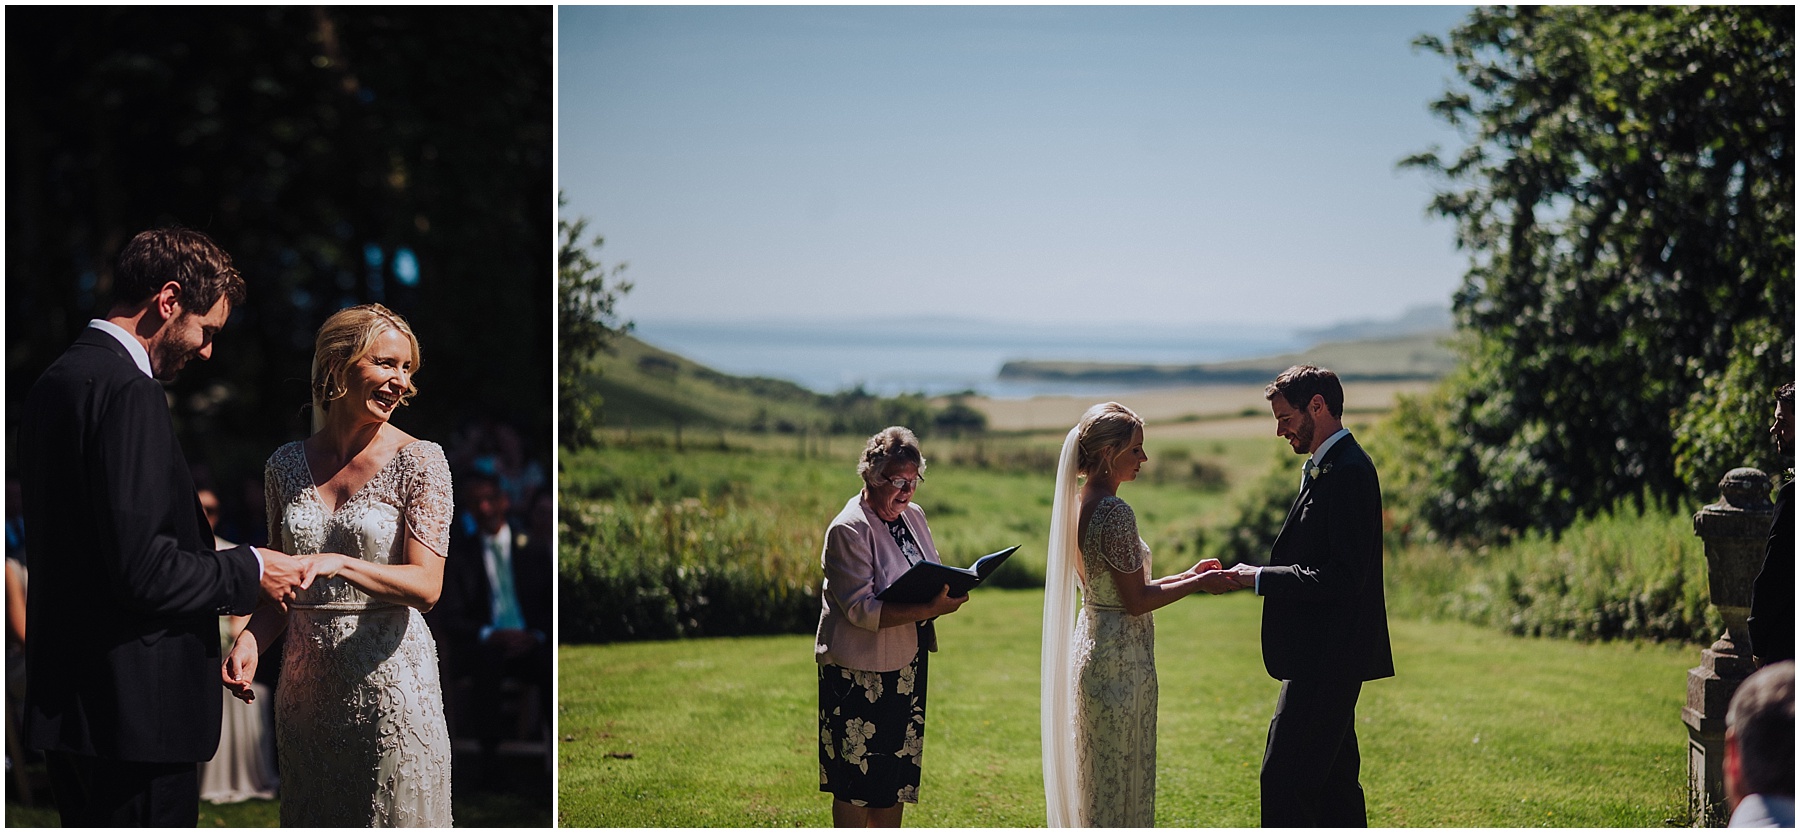 Smedmore House wedding photography, Dorset wedding photographer